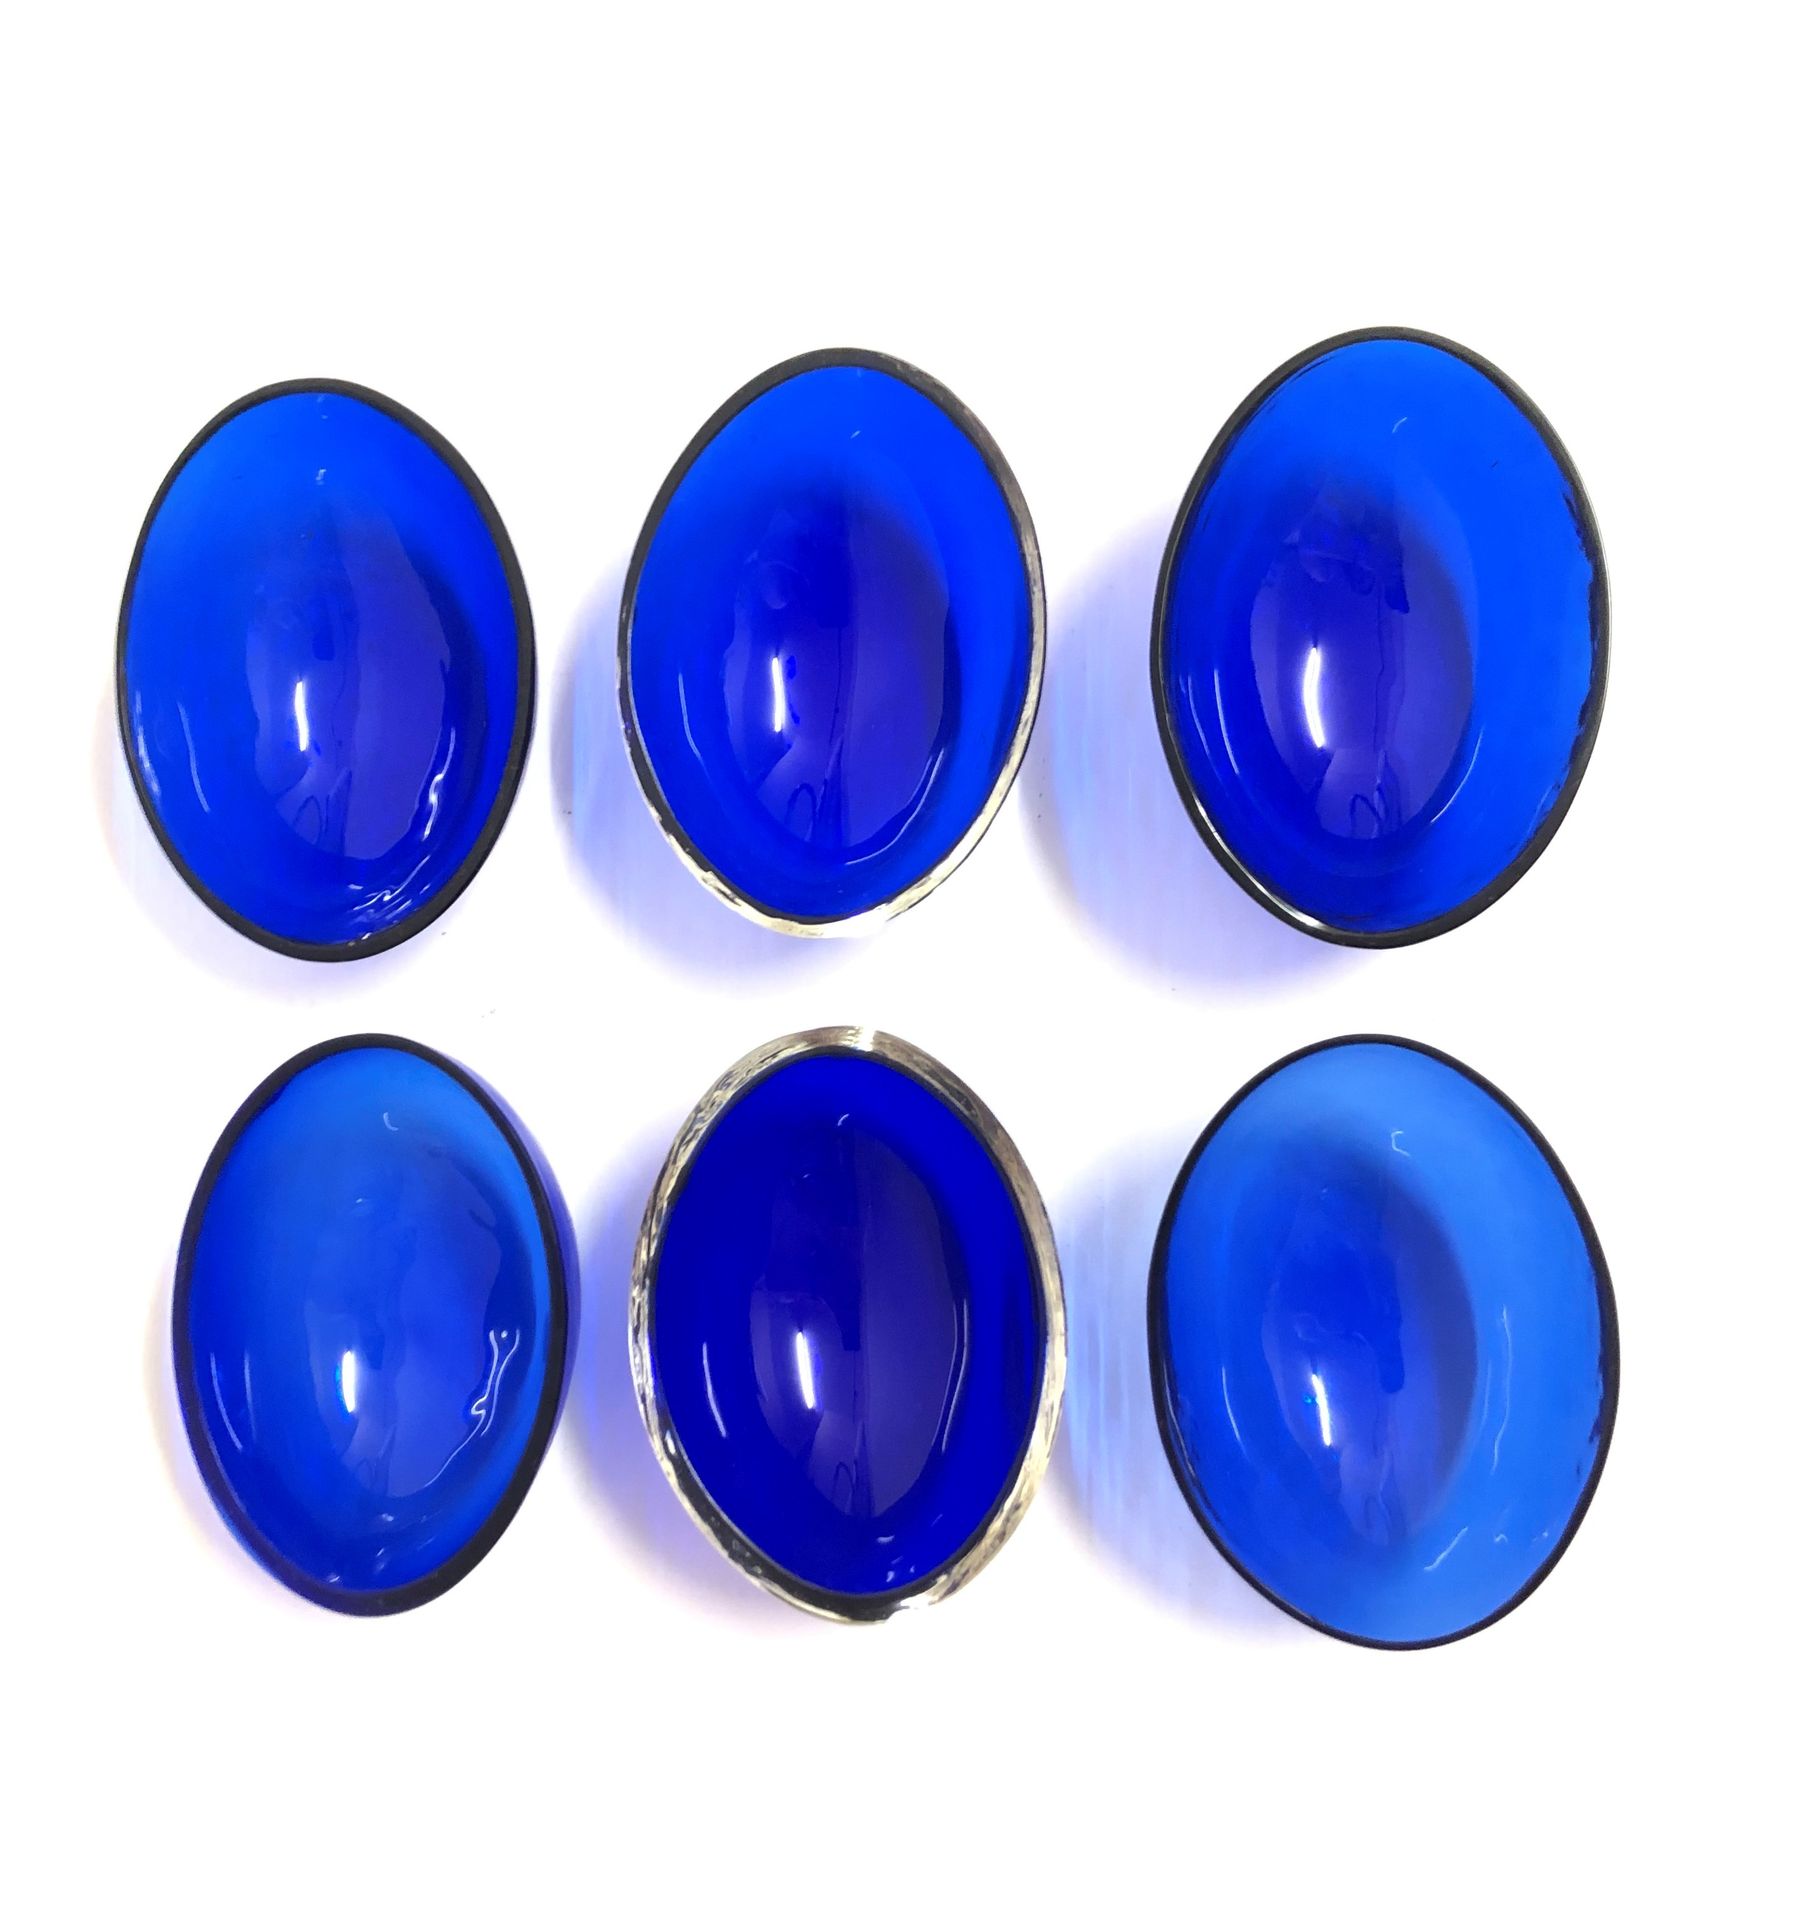 Null 6 COUPELLES en cristal tintado azul. Longitud: 9,5 cm.